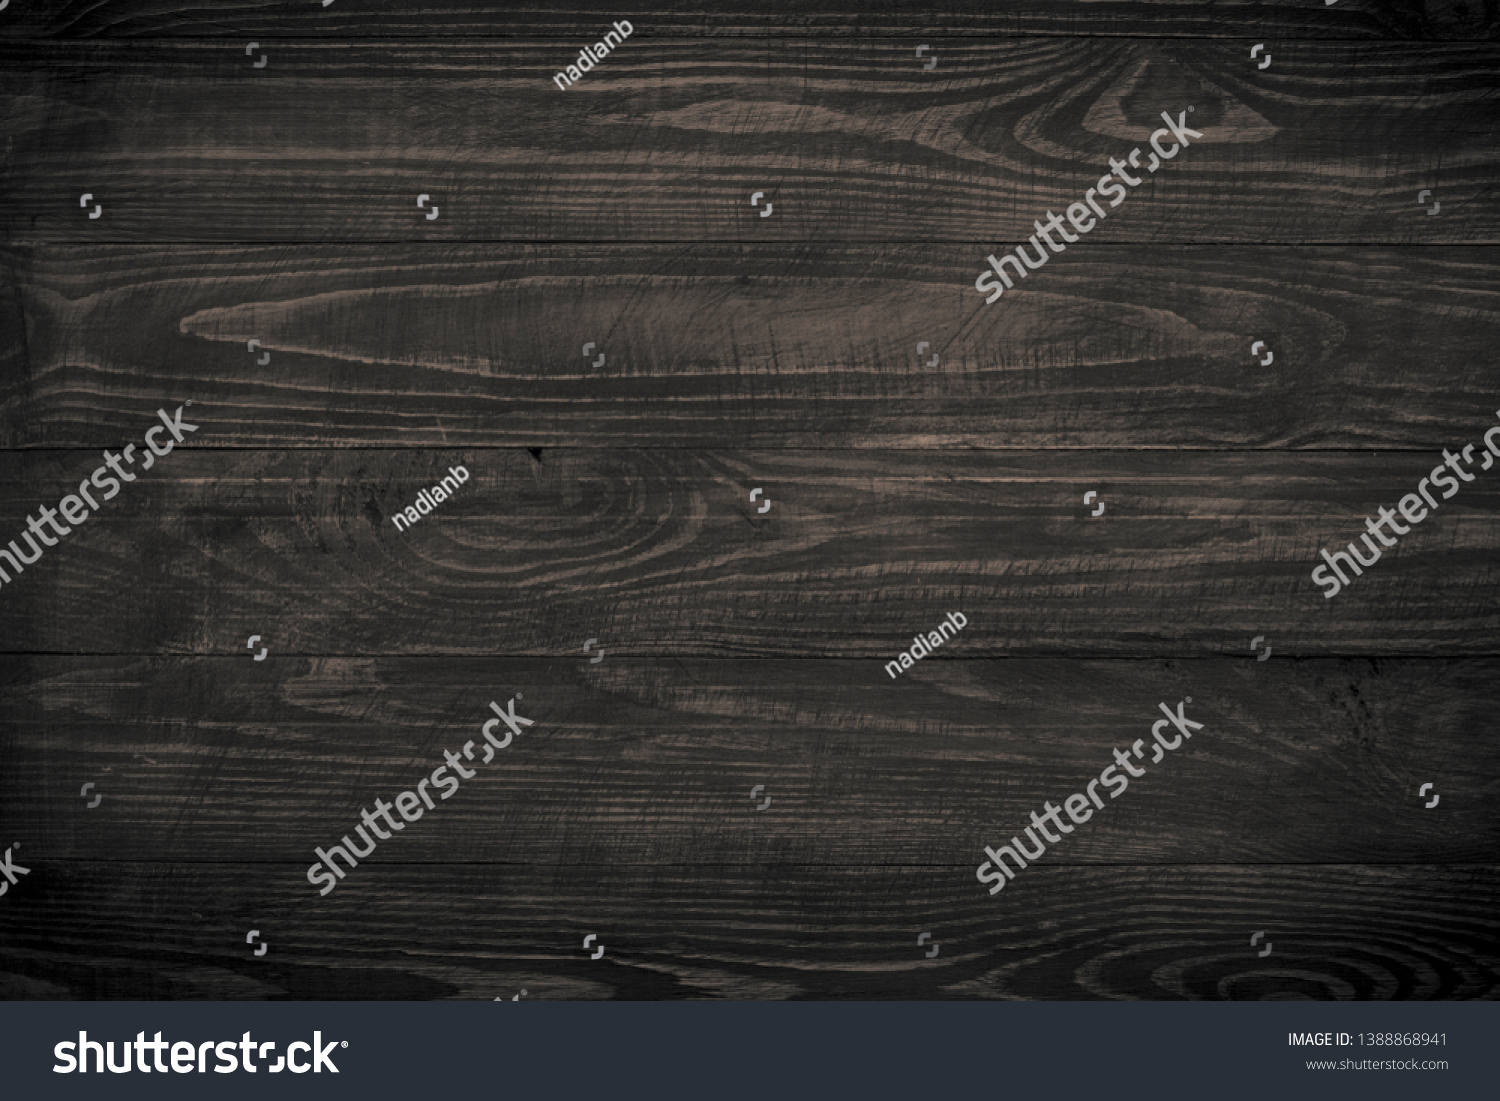 Wooden background. Dark wooden texture empty horizontal surface. Space for design. #1388868941